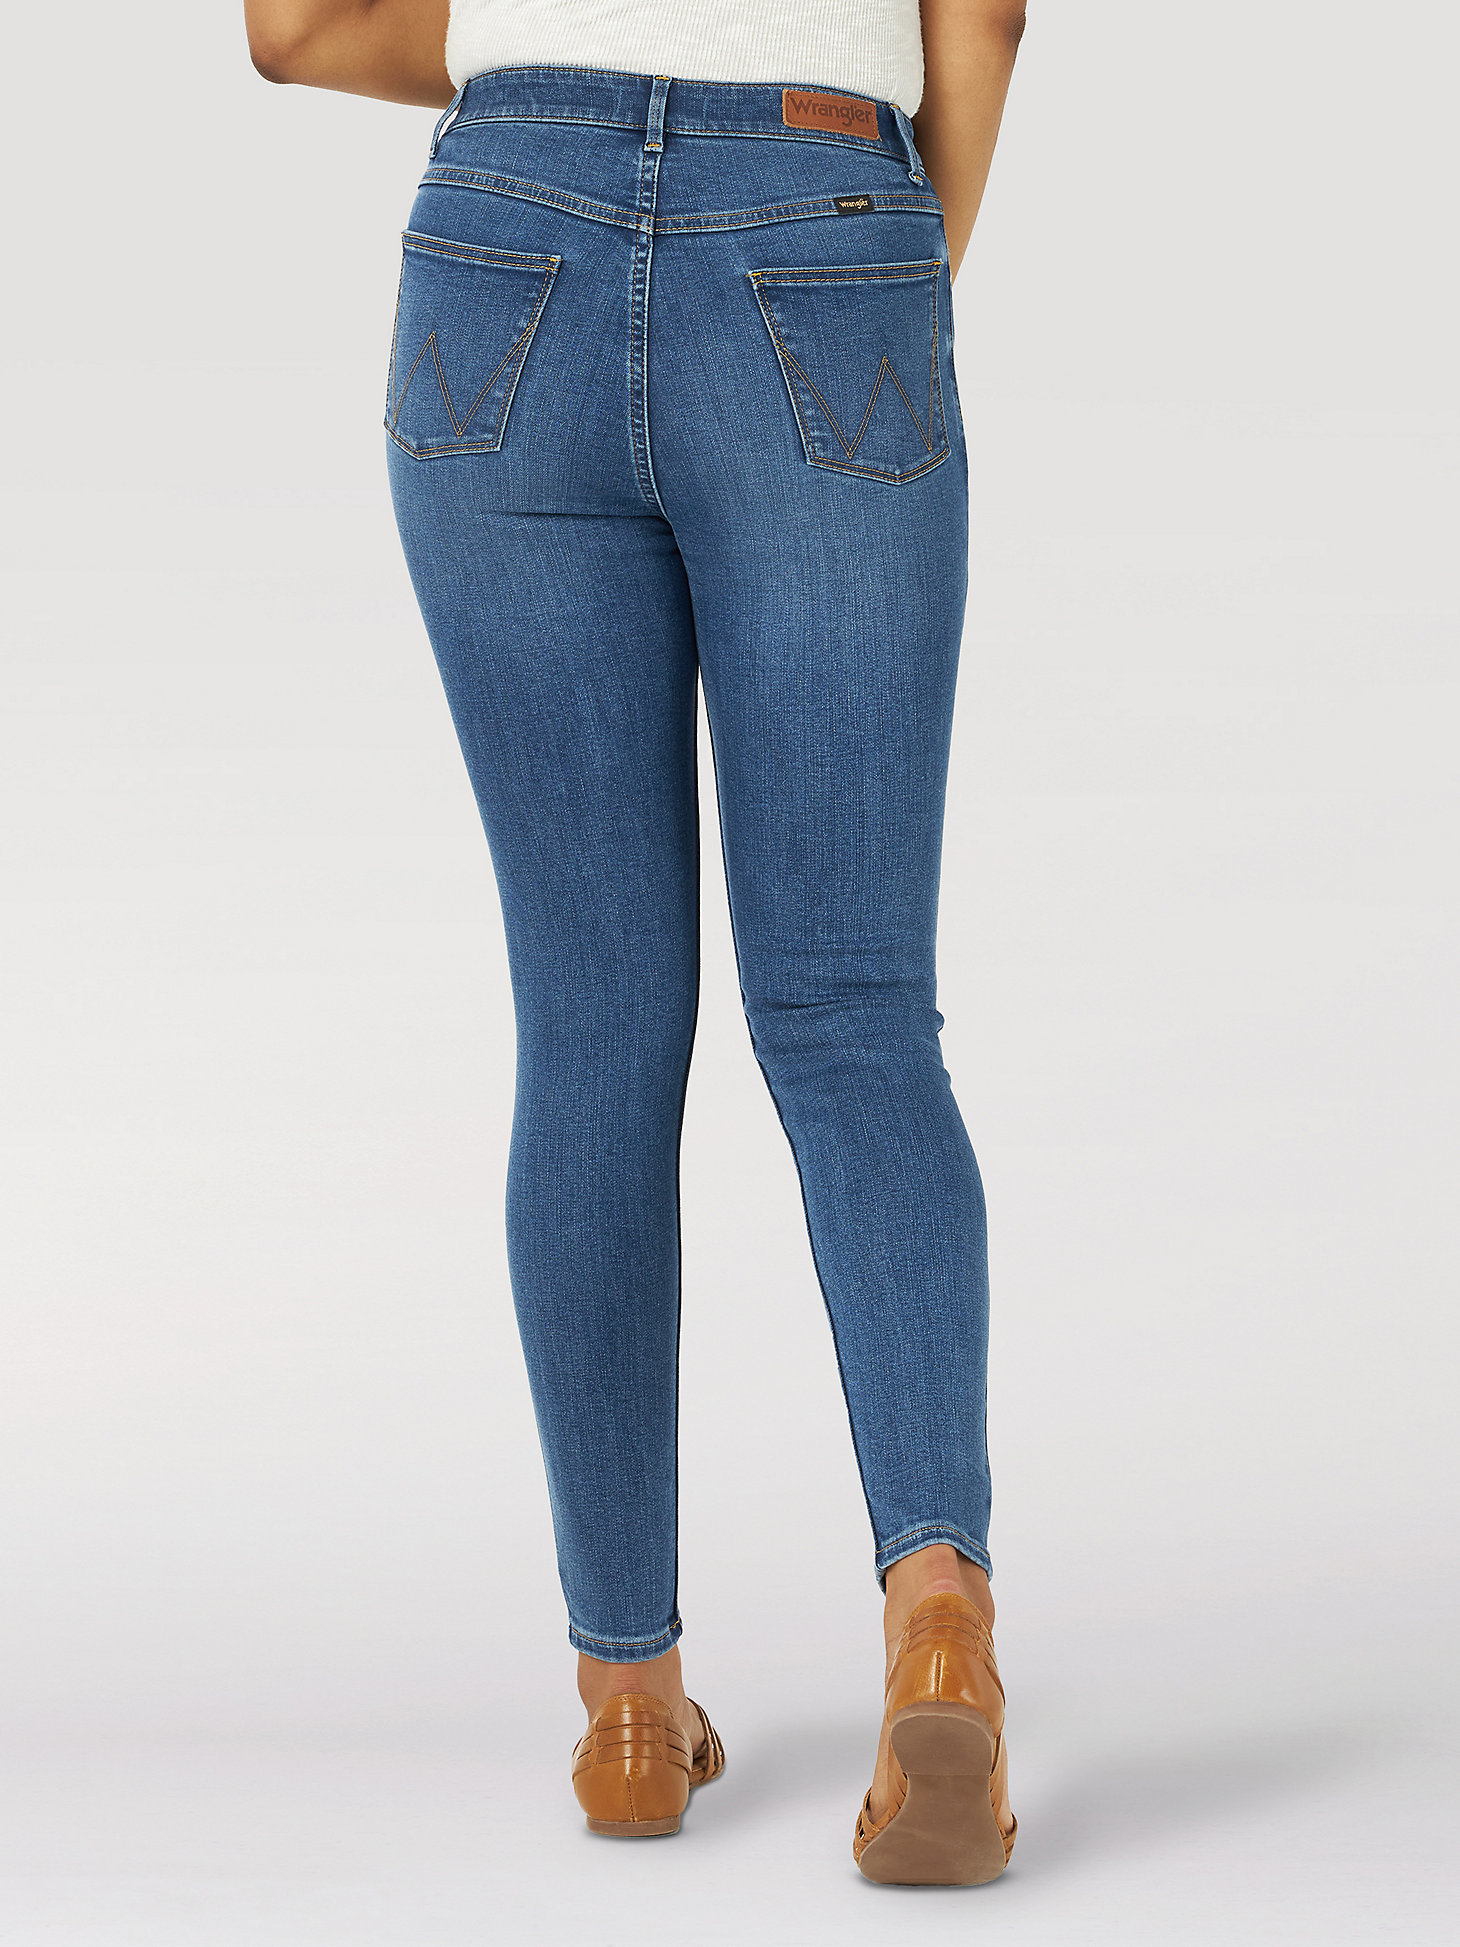 Women's Wrangler® High Rise Unforgettable Skinny Jeans in Cloud alternative view 1